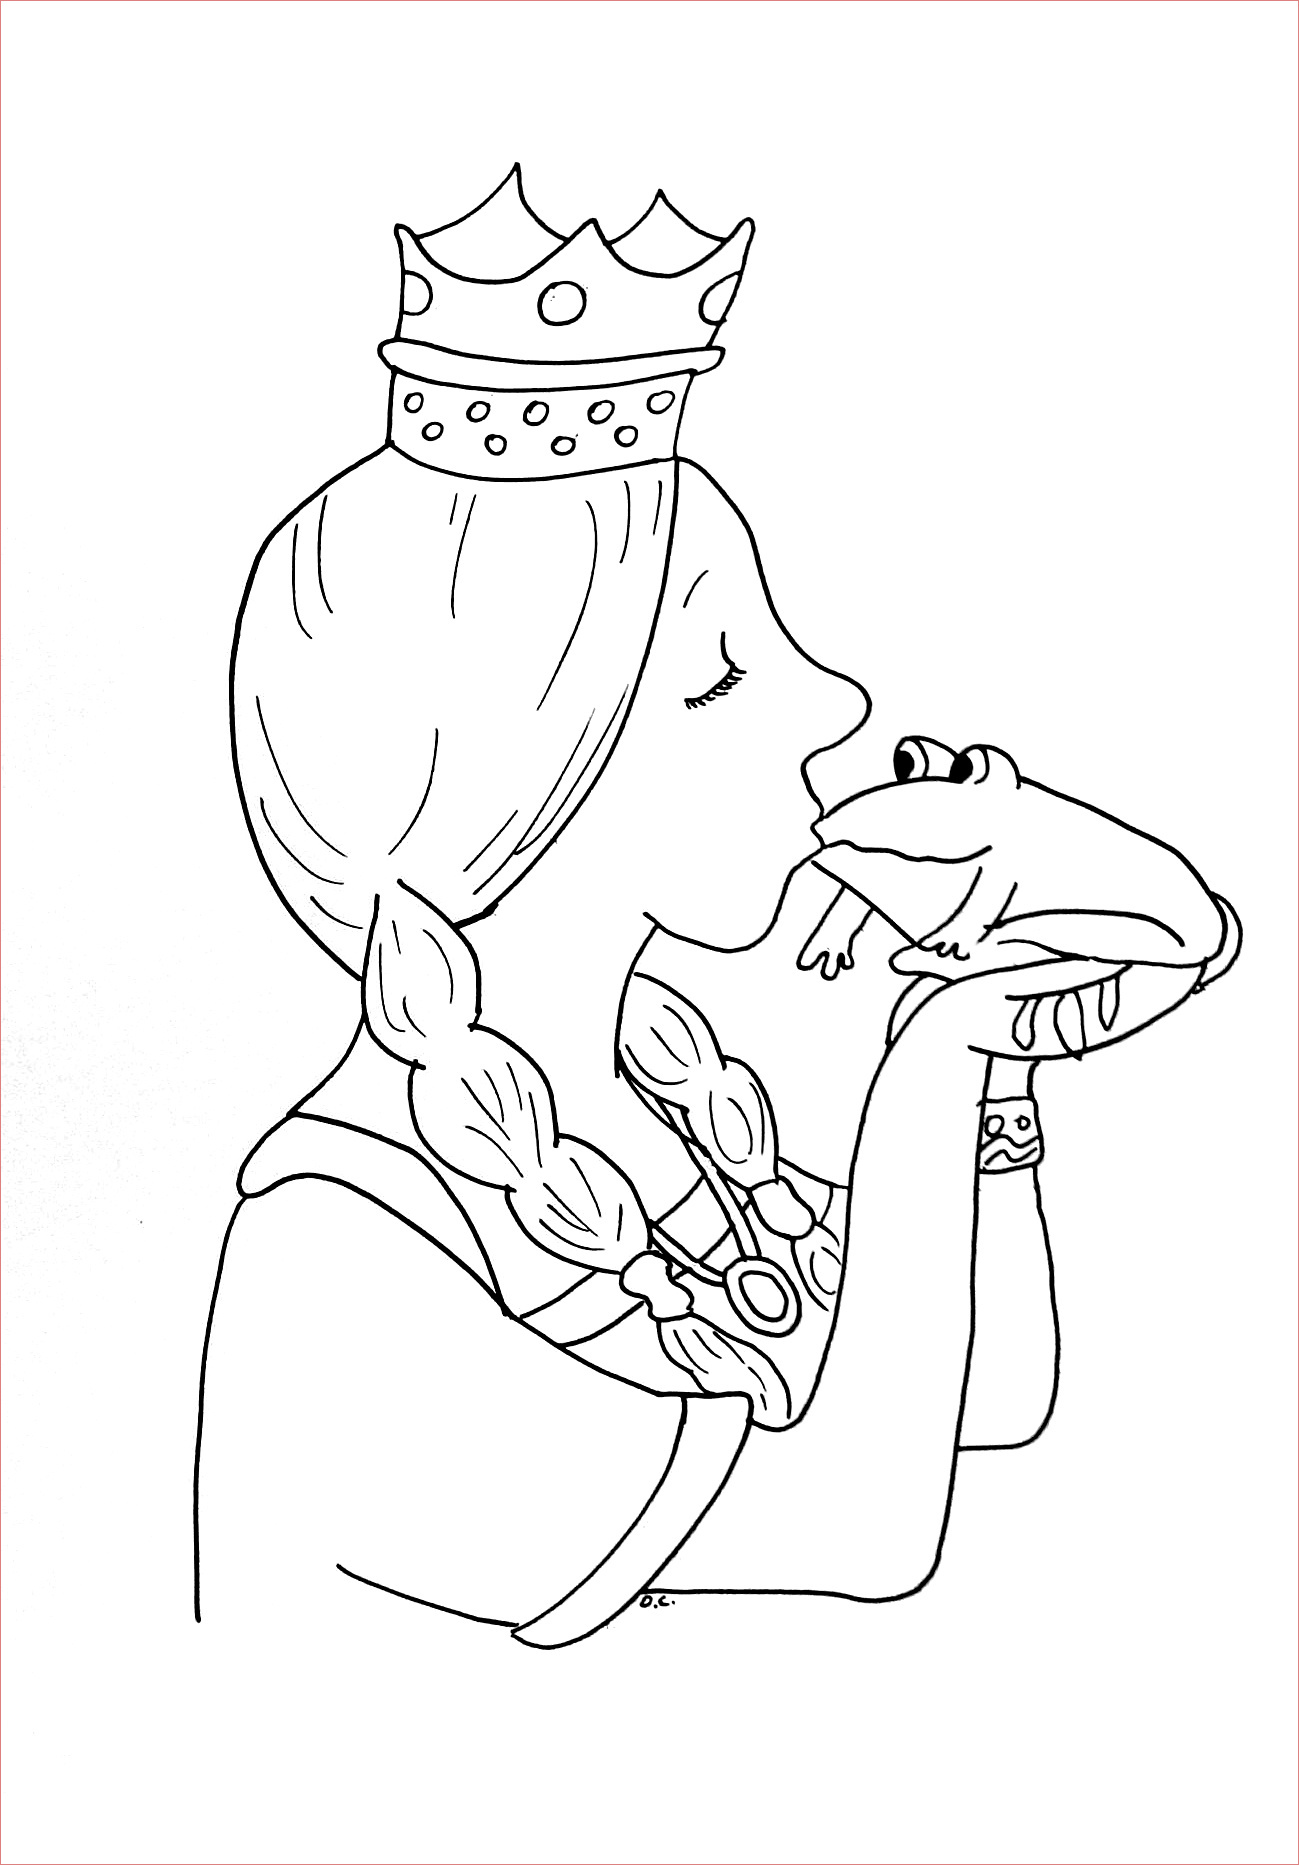 image=princesses coloriage princesse bisou grenouille 1